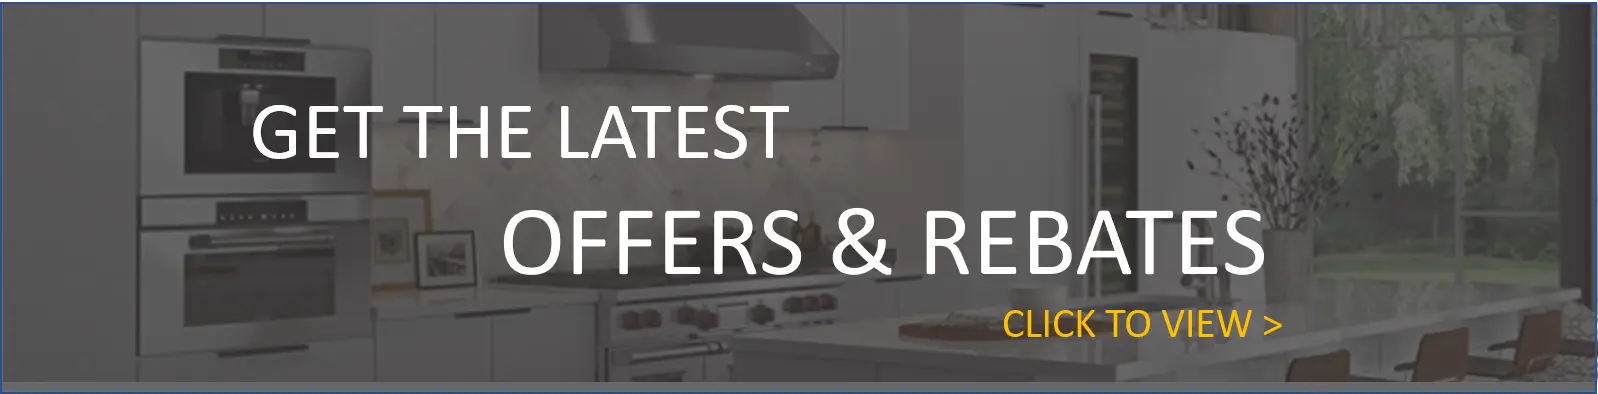 Offers & Rebates | Capital Distributing Kitchen Appliance Showroom 